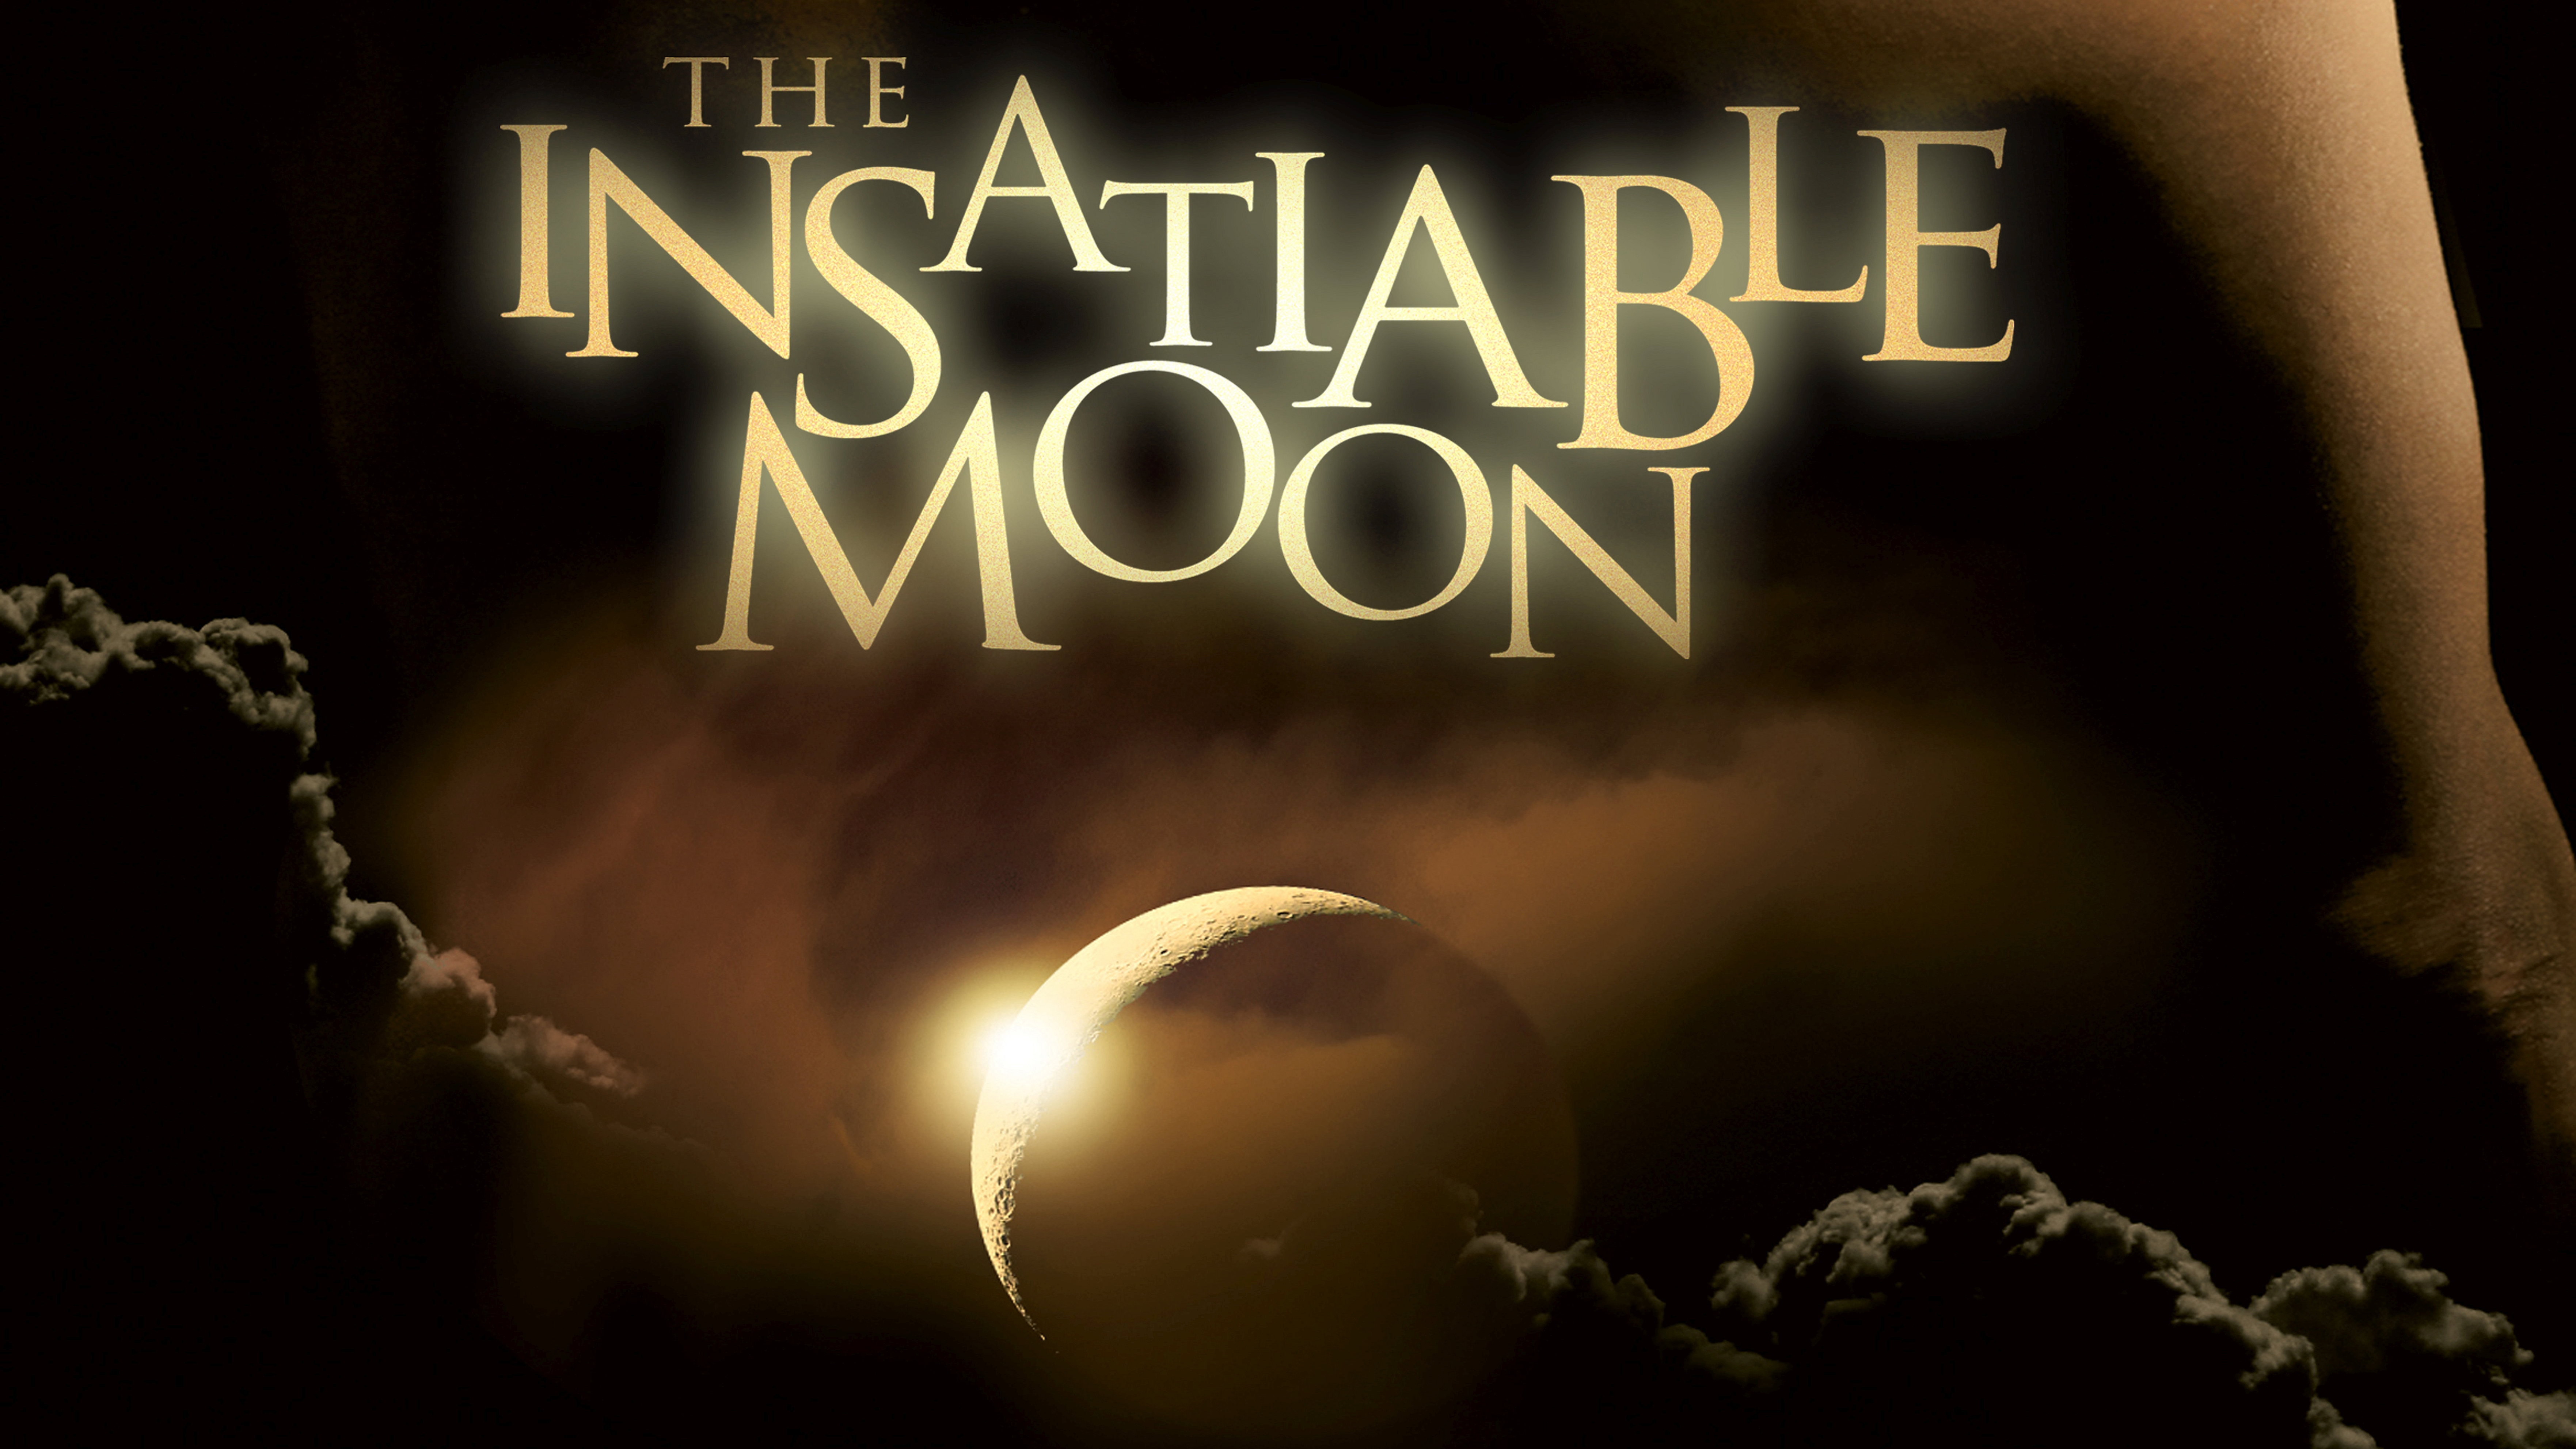 The Insatiable Moon 4k Ultra HD Wallpaper